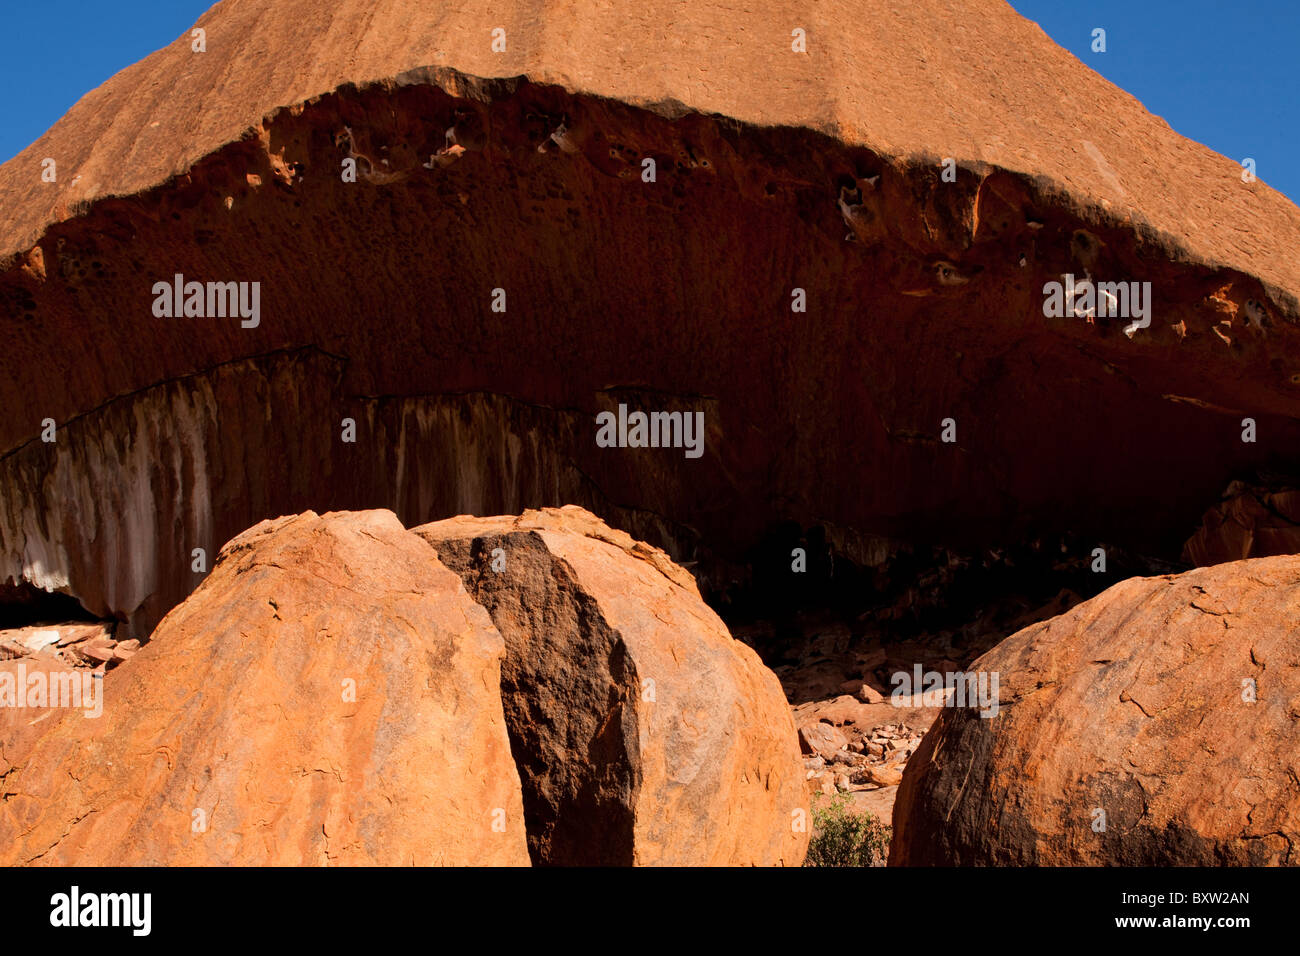 Australien, Northern Territory, Uluru - Kata Tjuta National Park, Shattered Felsen auf Basis des Ayers Rock auf Sommermorgen Stockfoto